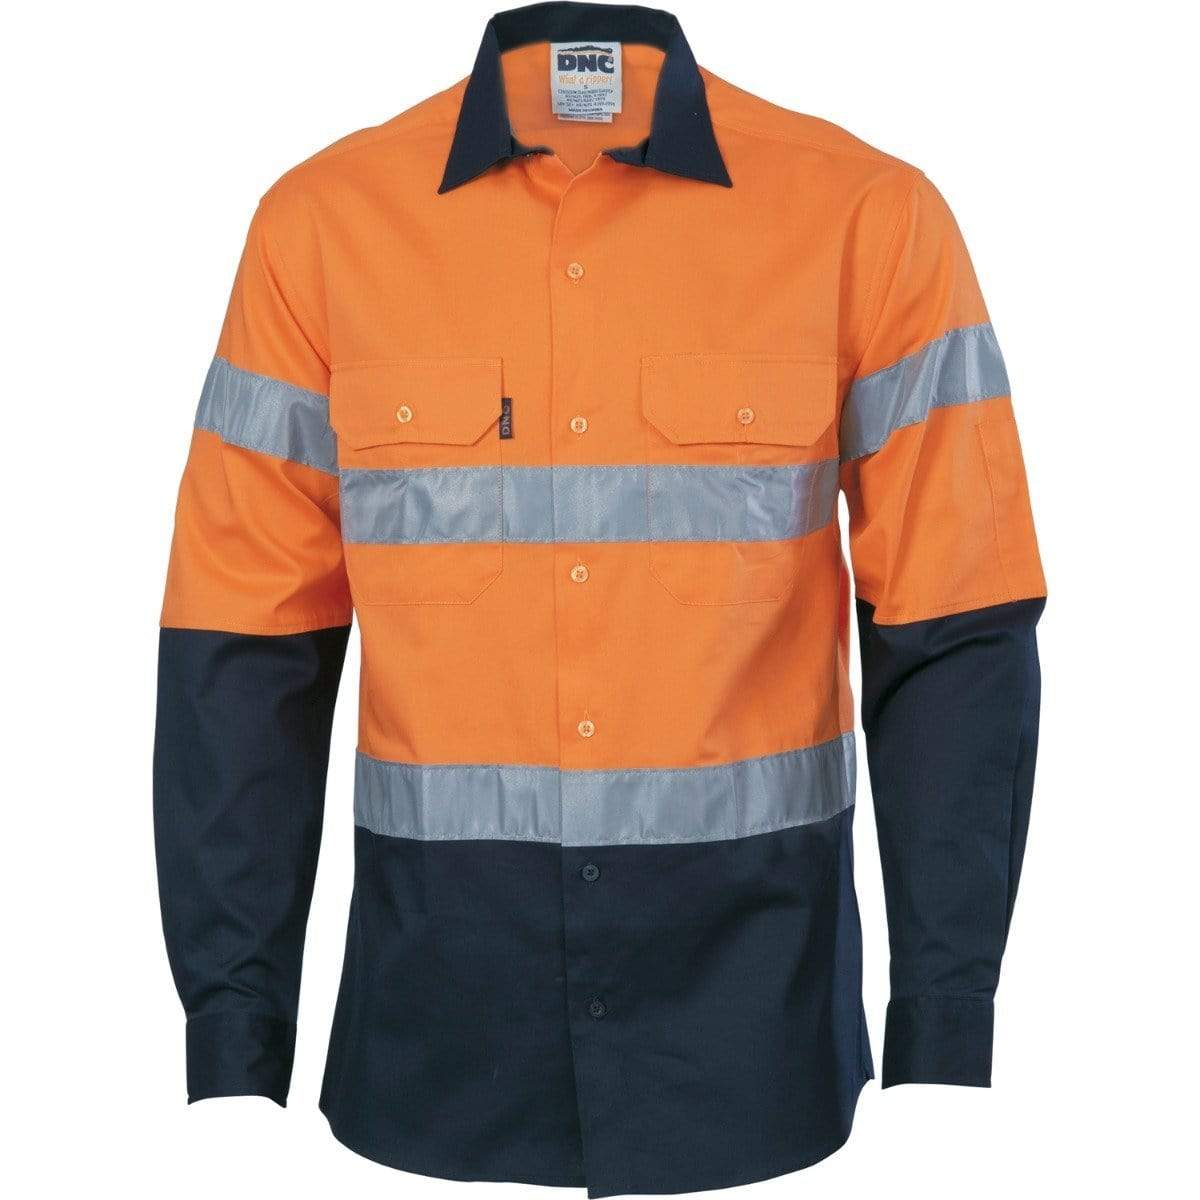 Dnc Workwear Hi-vis Cool-breeze Long Sleeve Cotton Shirt With Generic Reflective Tape - 3966 Work Wear DNC Workwear Orange/Navy XS 